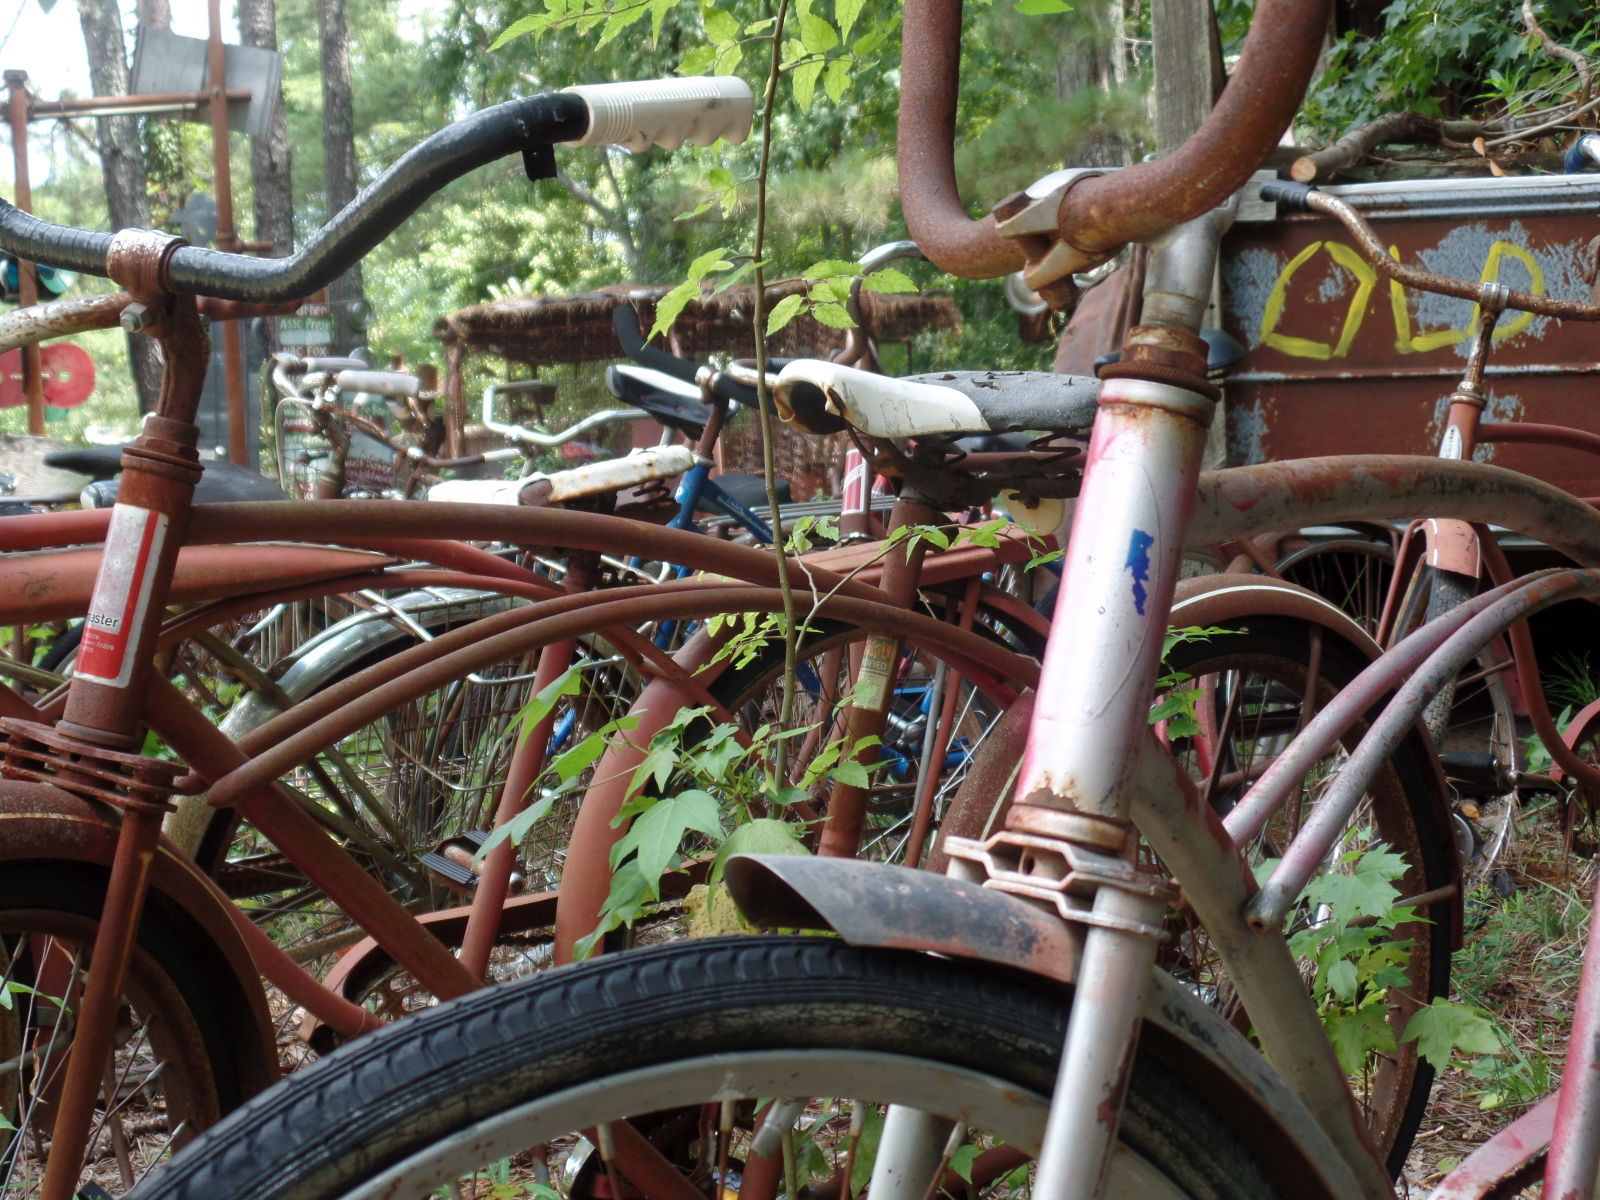 Many bicycles decompose alongside their 4 wheeled brethren